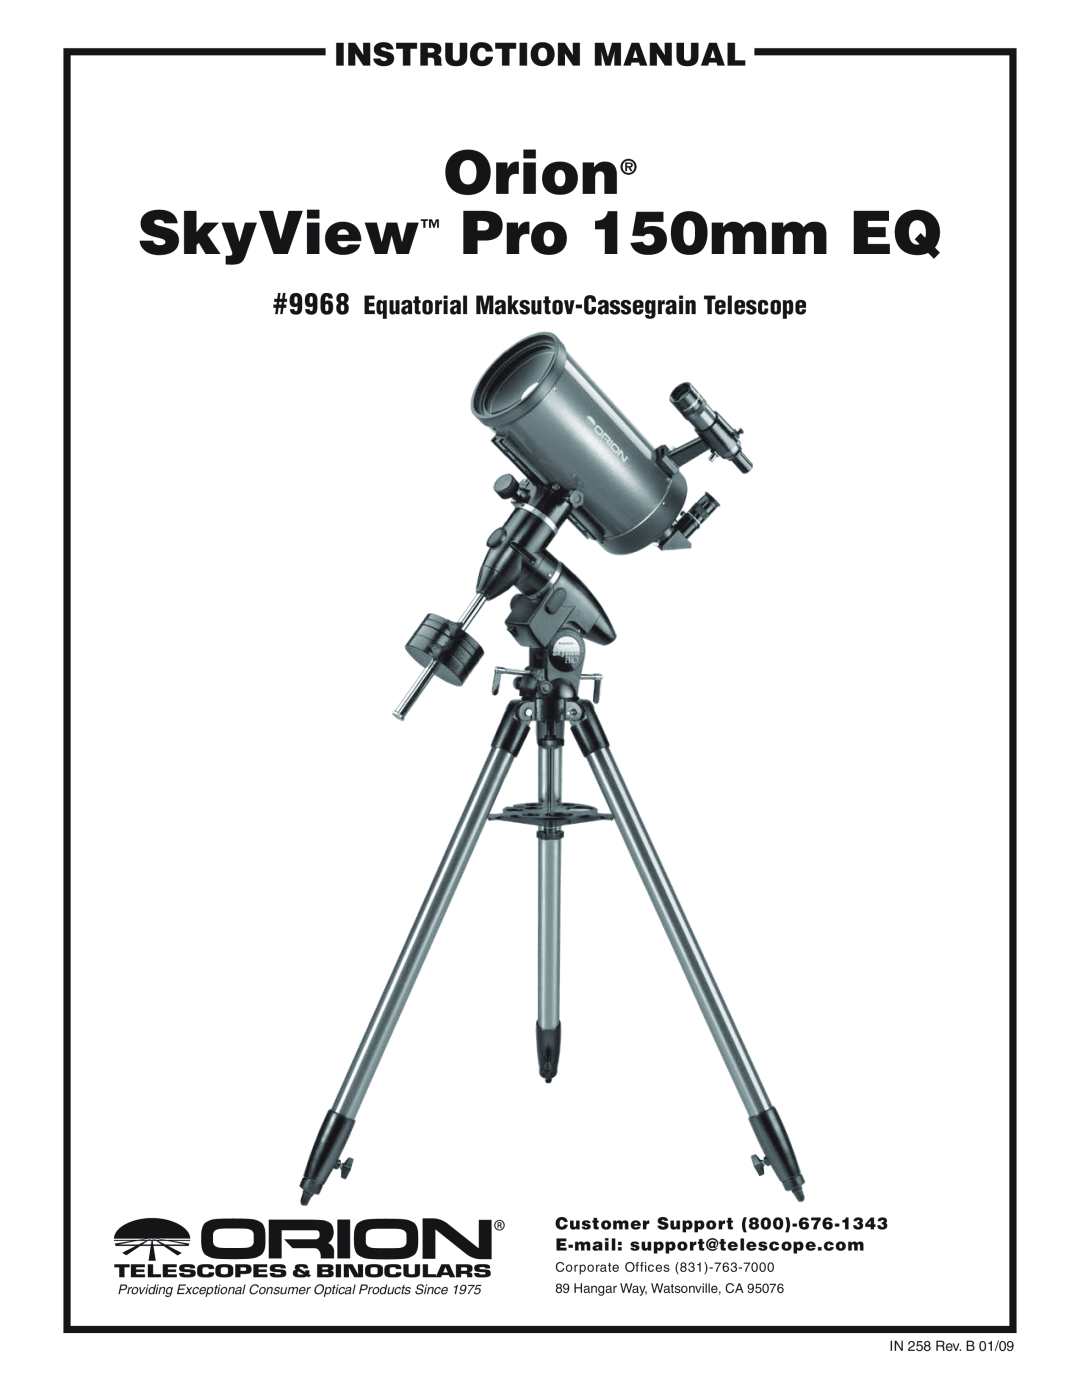 Orion instruction manual #9968 Equatorial Maksutov-Cassegrain Telescope, Customer Support 800‑676-1343 